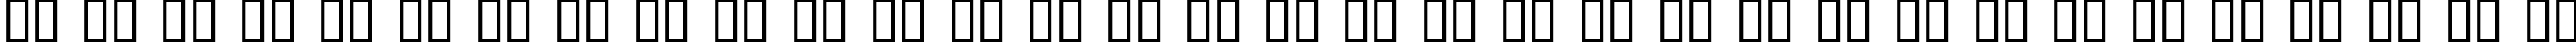 Пример написания русского алфавита шрифтом Cute Line